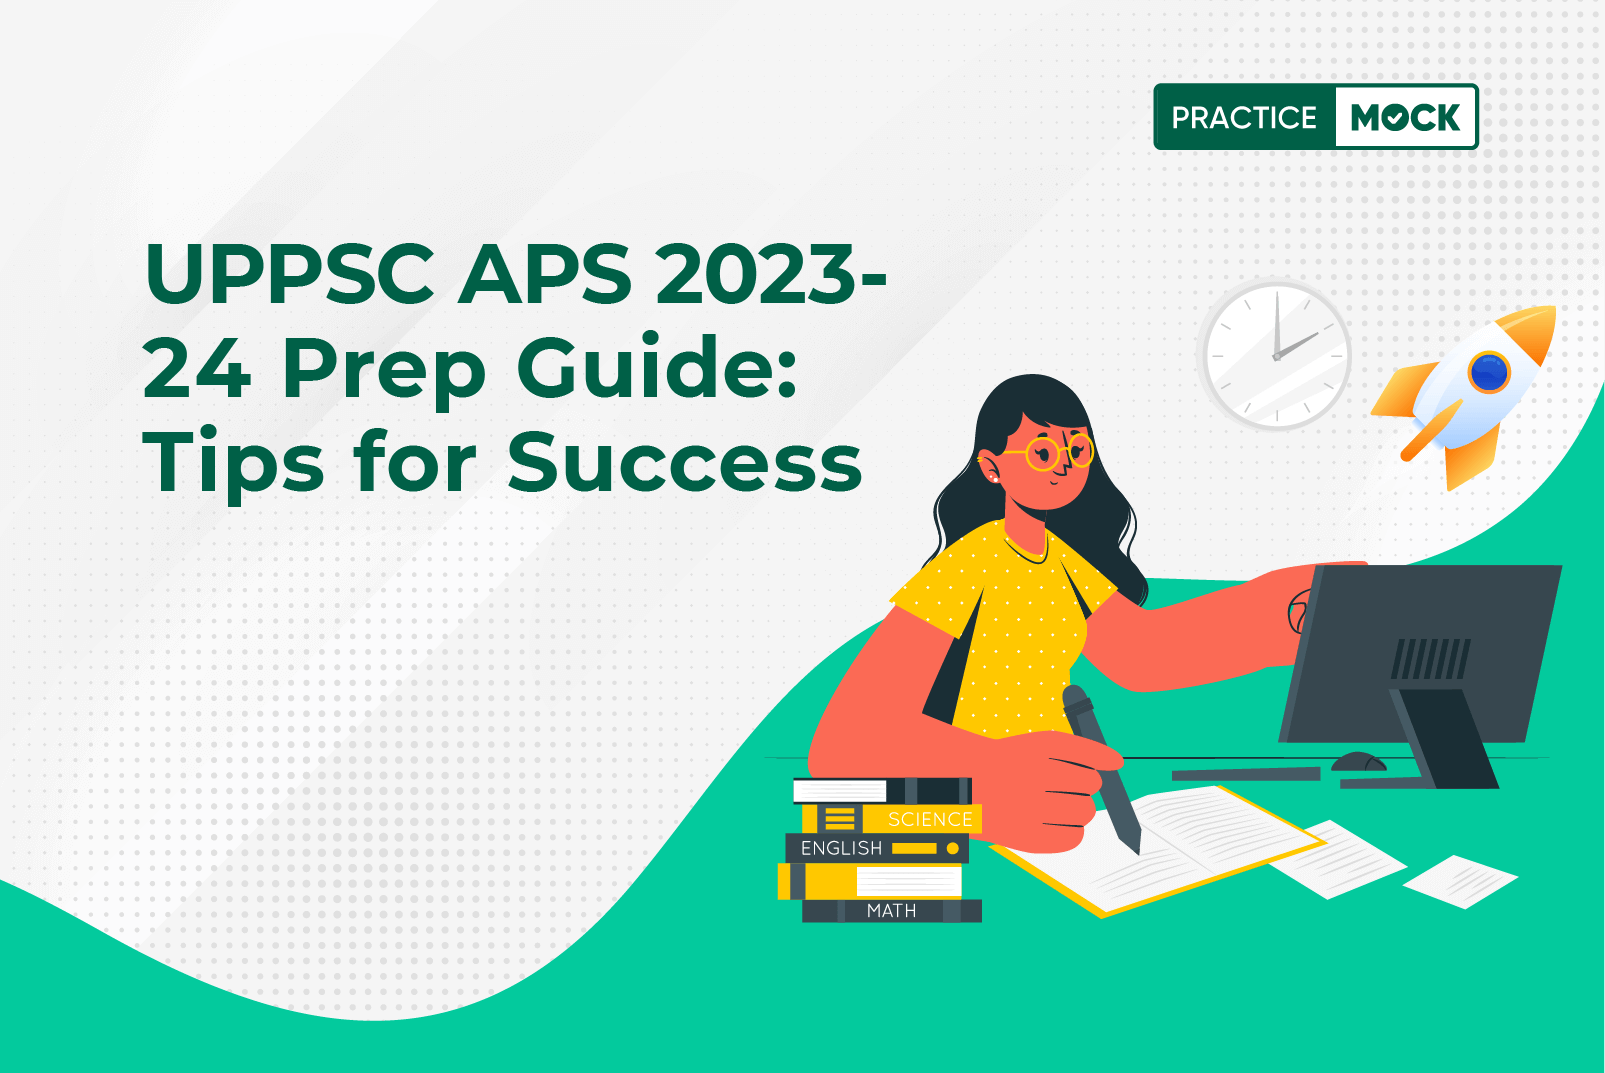 UPPSC APS 2023-24 Prep Guide: Tips for Success